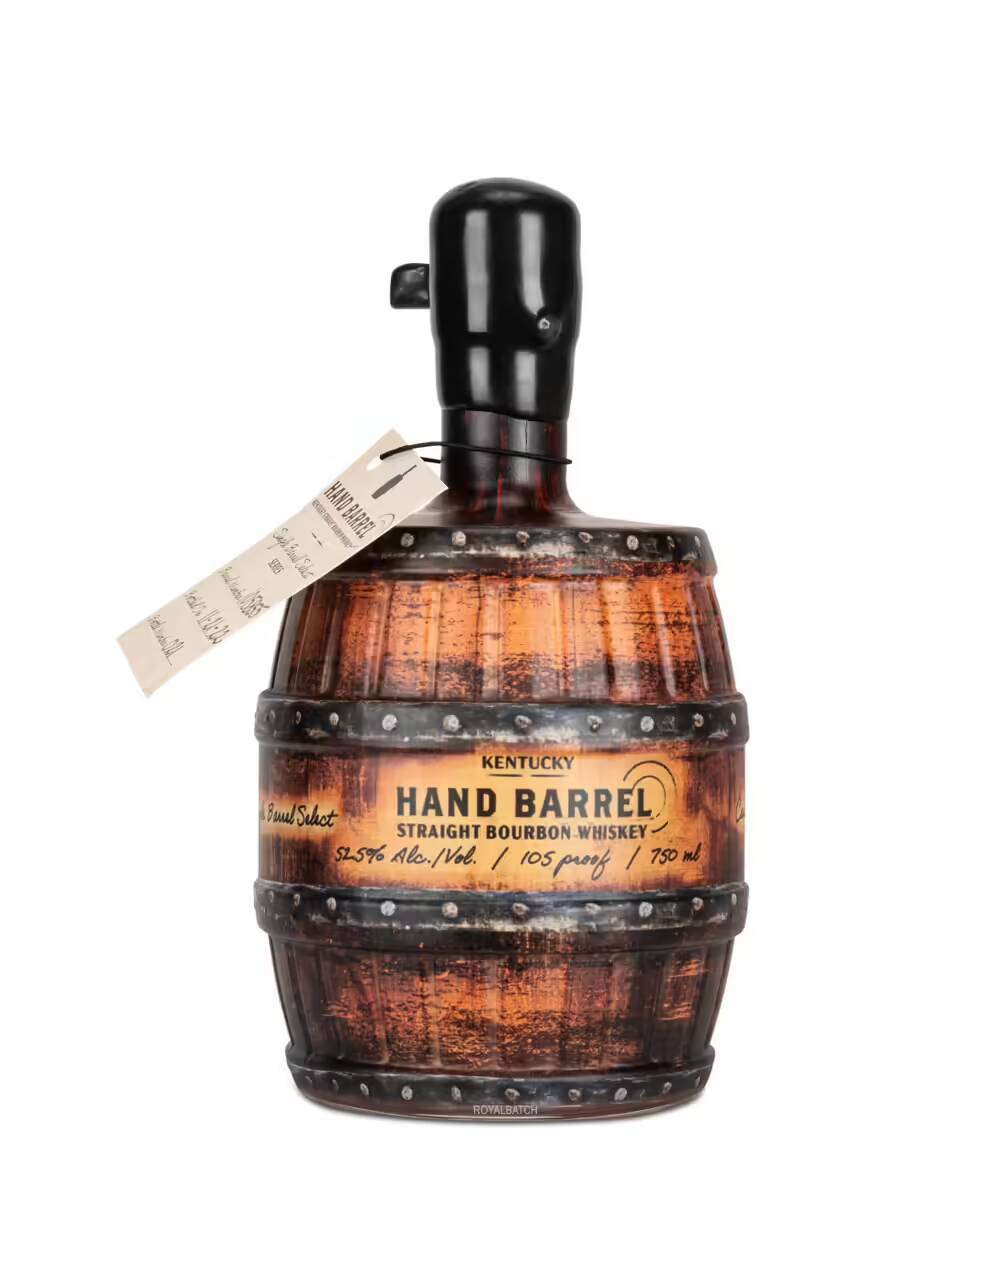 Hand Barrel Single Barrel select Kentucky Straight Bourbon Whiskey